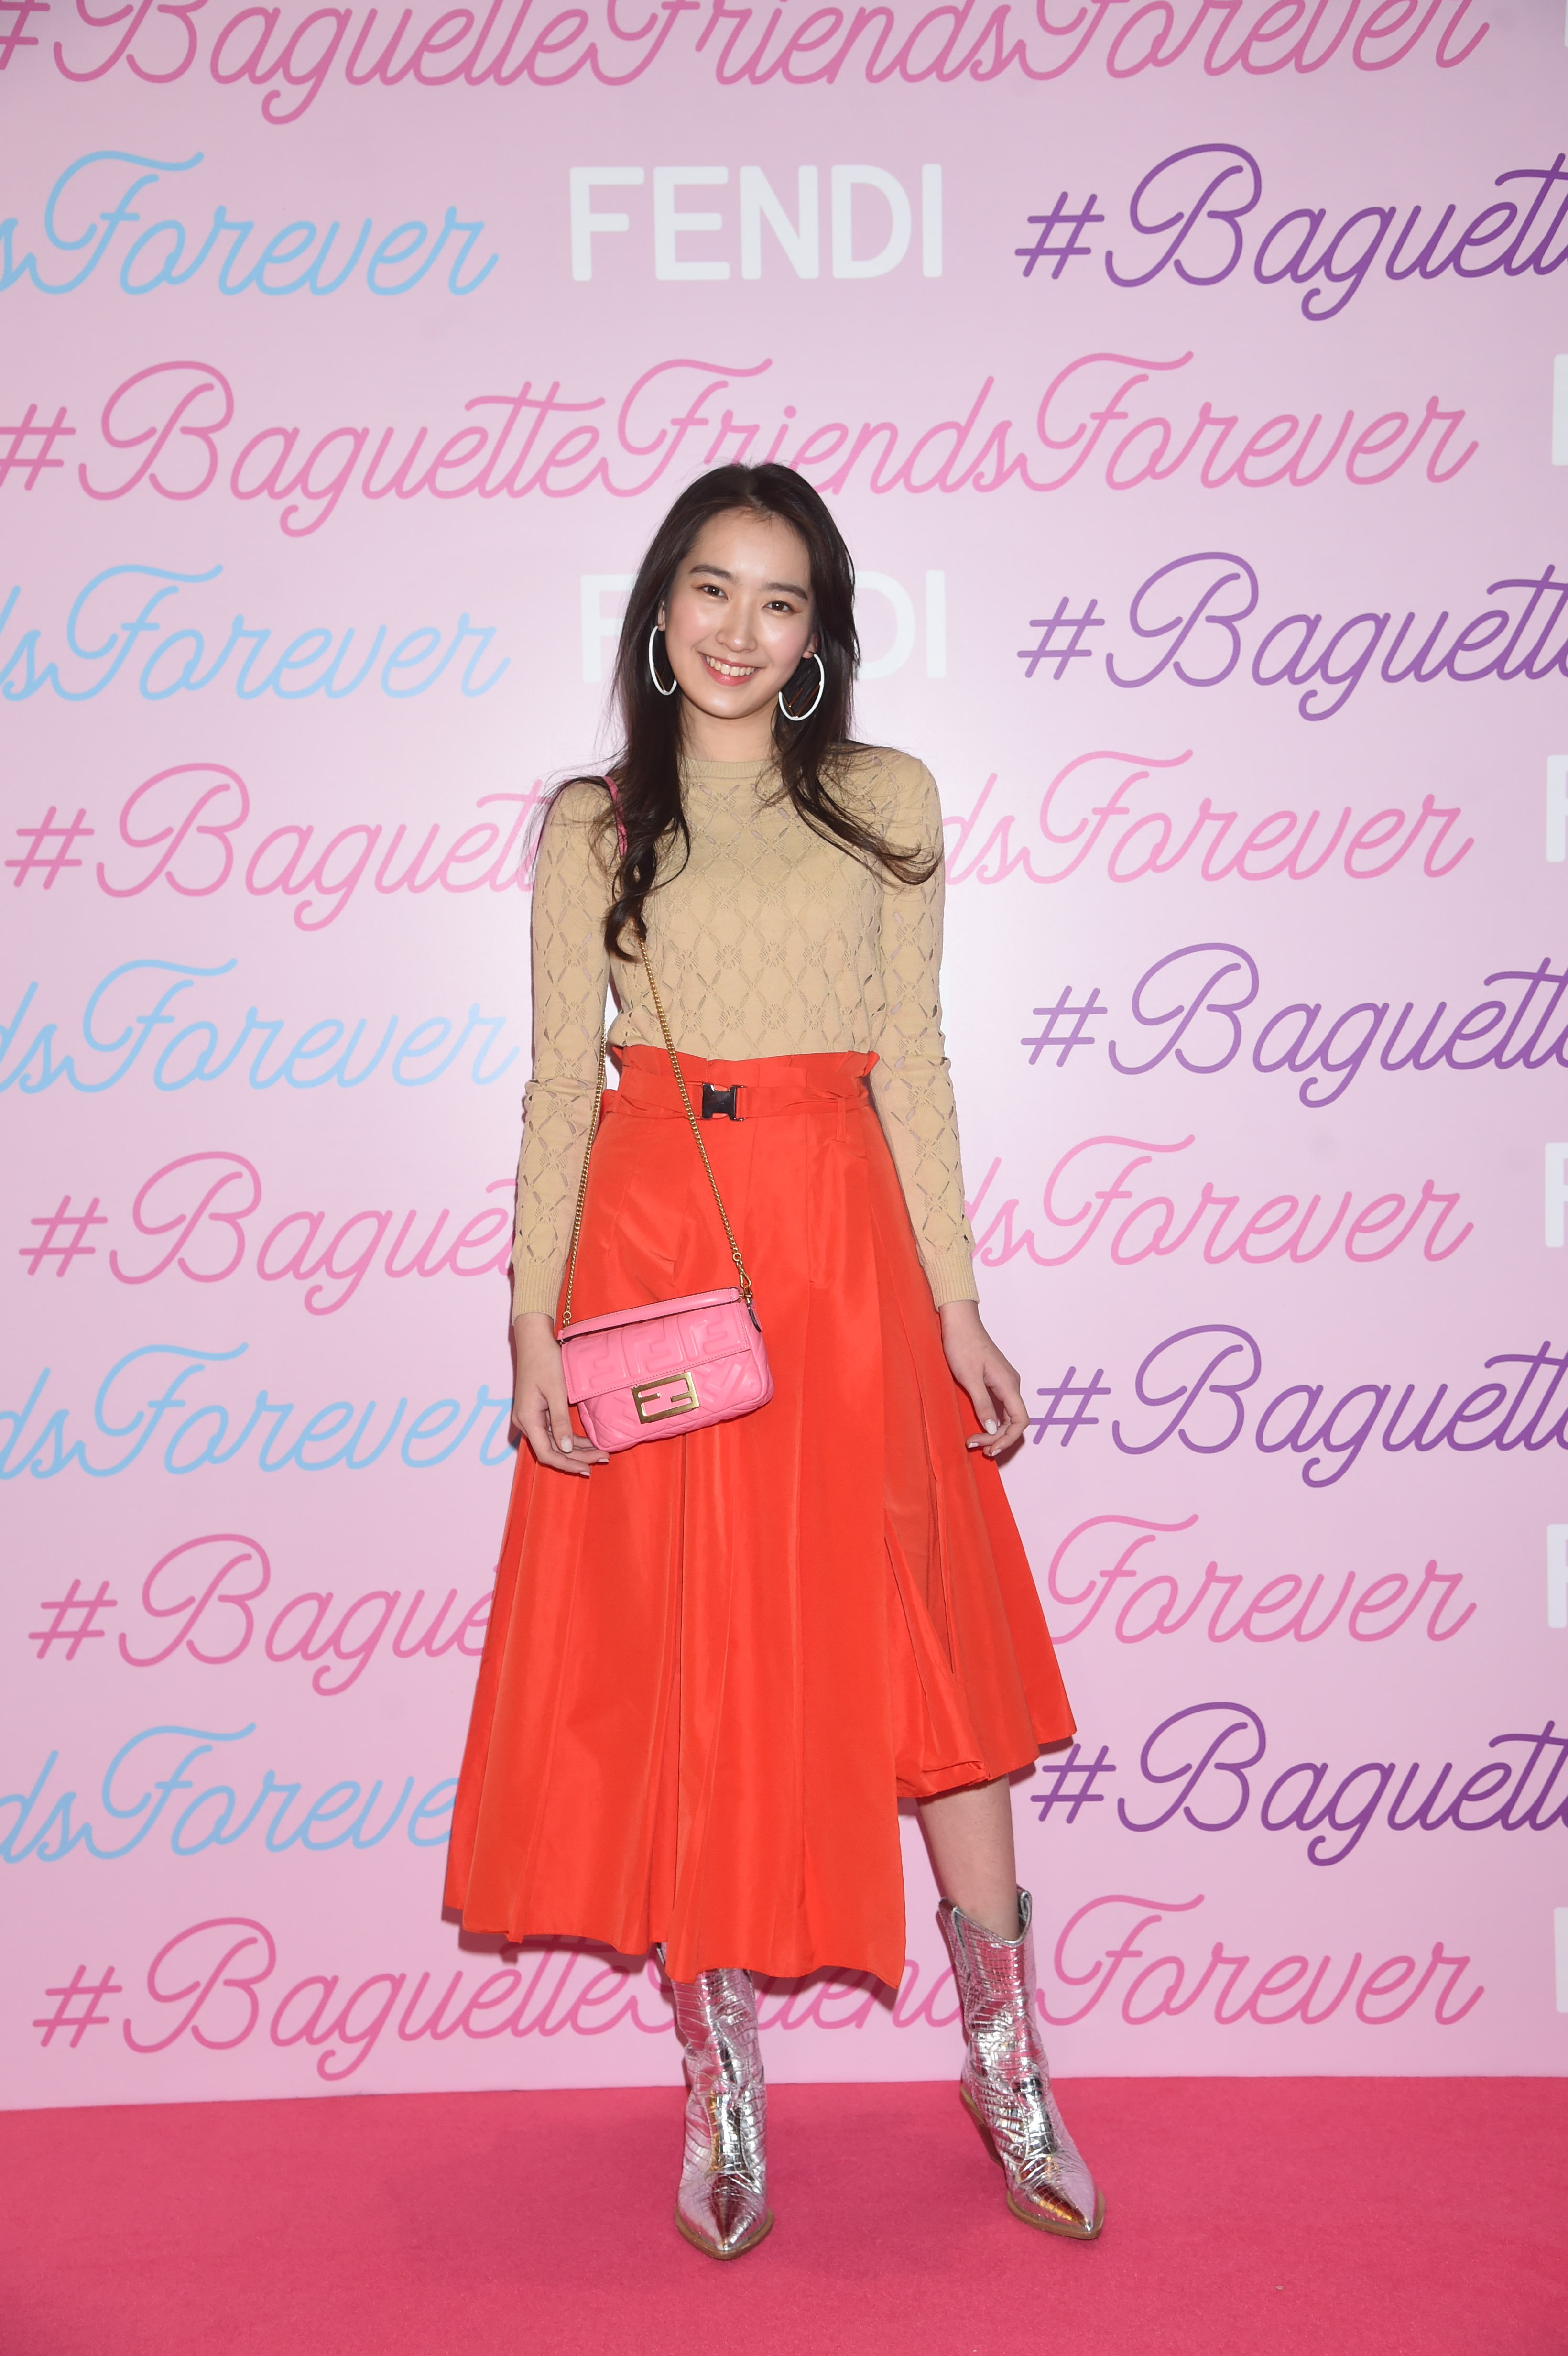 Fendi welcomes back Baguette bag with Sarah Jessica Parker in digital  campaign